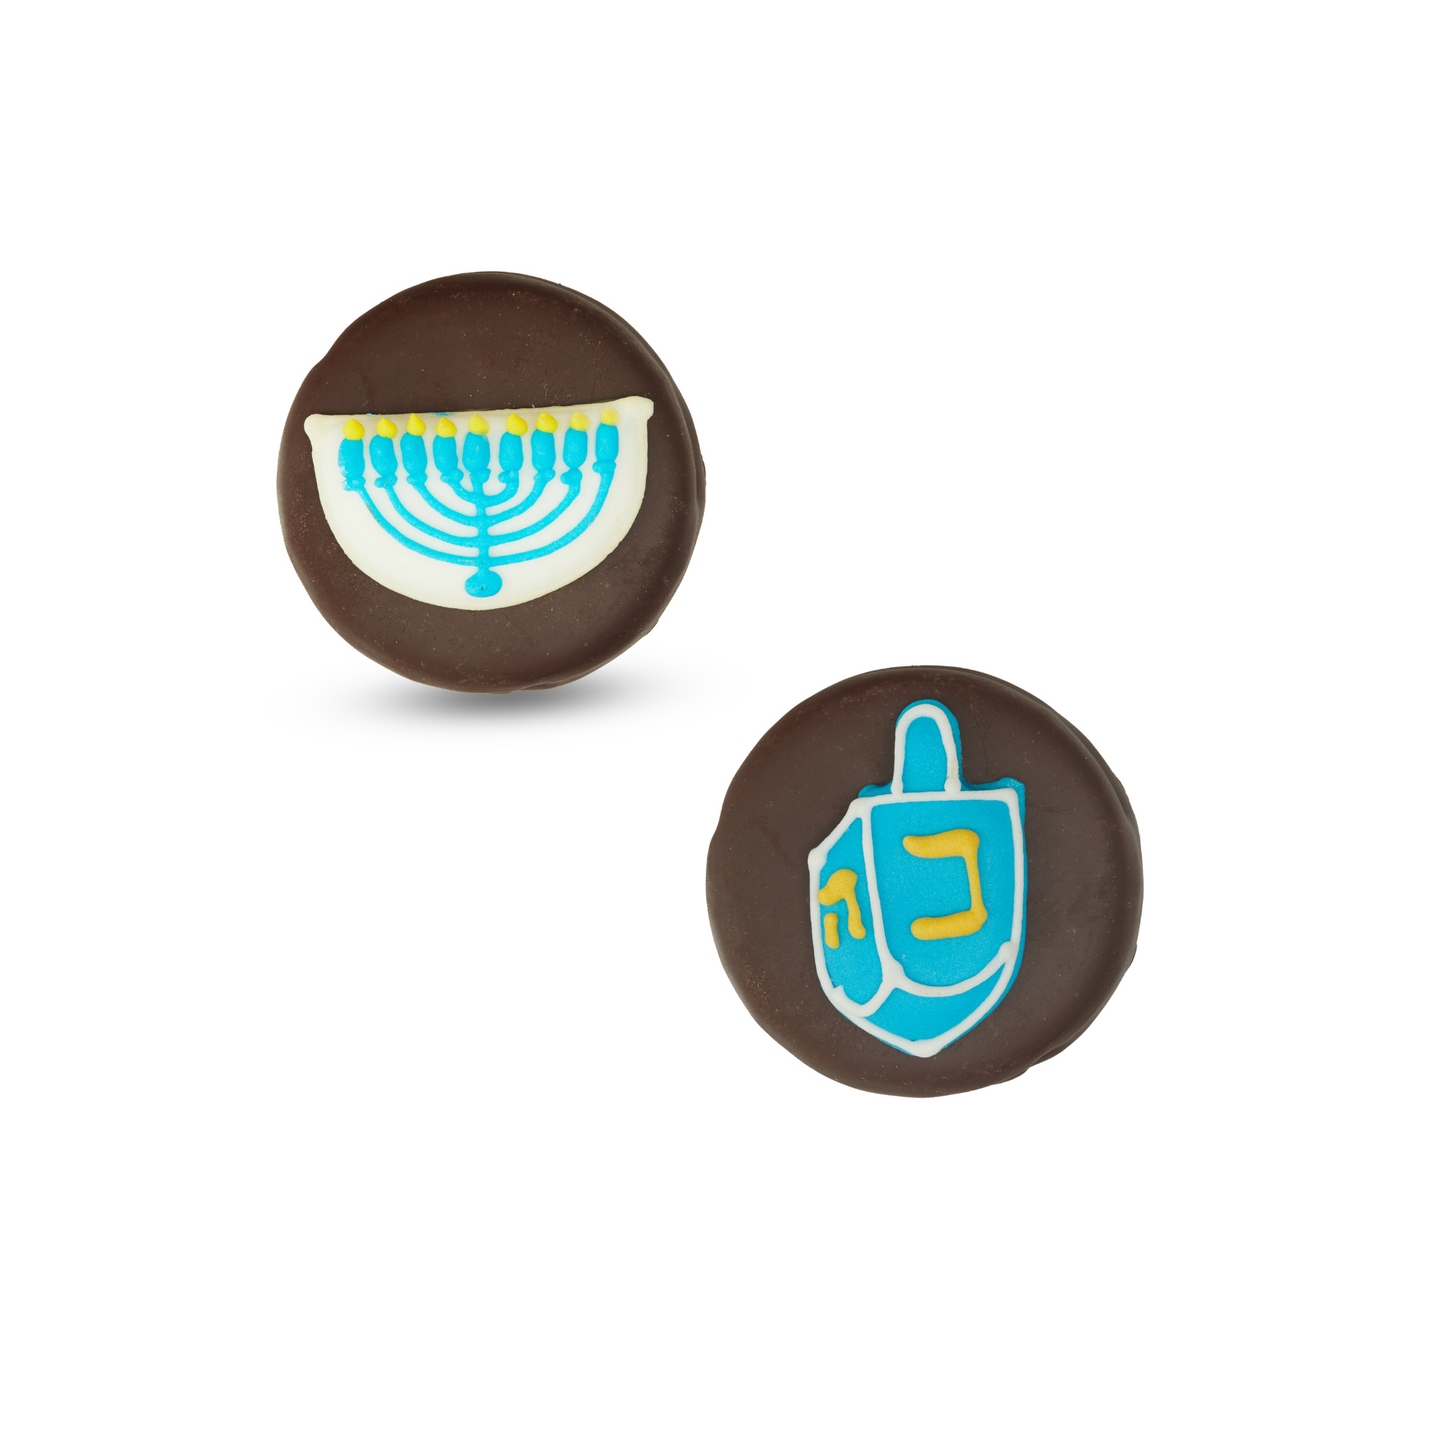 Chanukkah-Themed Oreo-Style Cookies